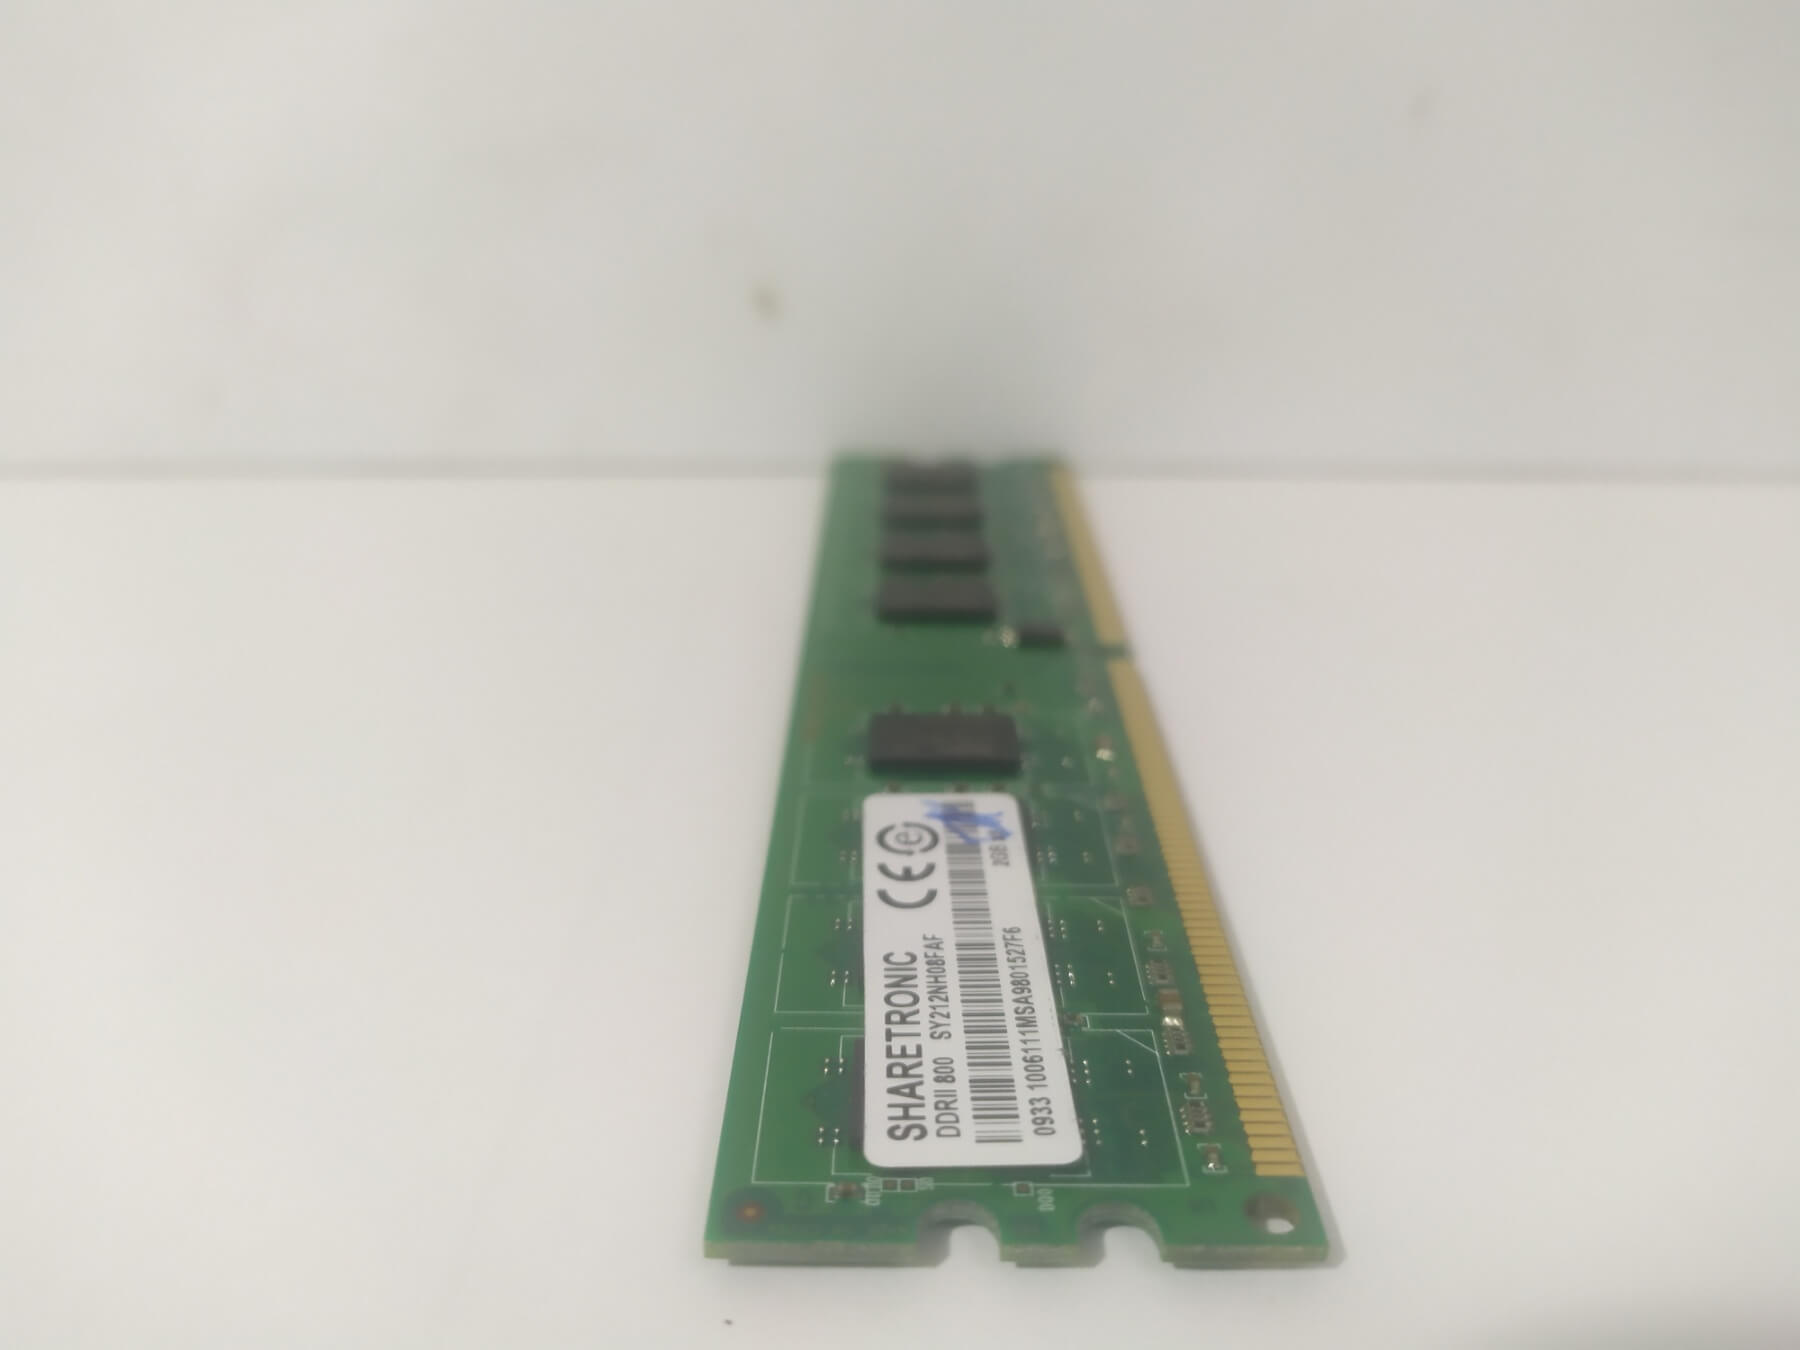 Оперативная память 2GB SHARETRONIC DDR2 PC2-6400(800) SY212NH08FAF